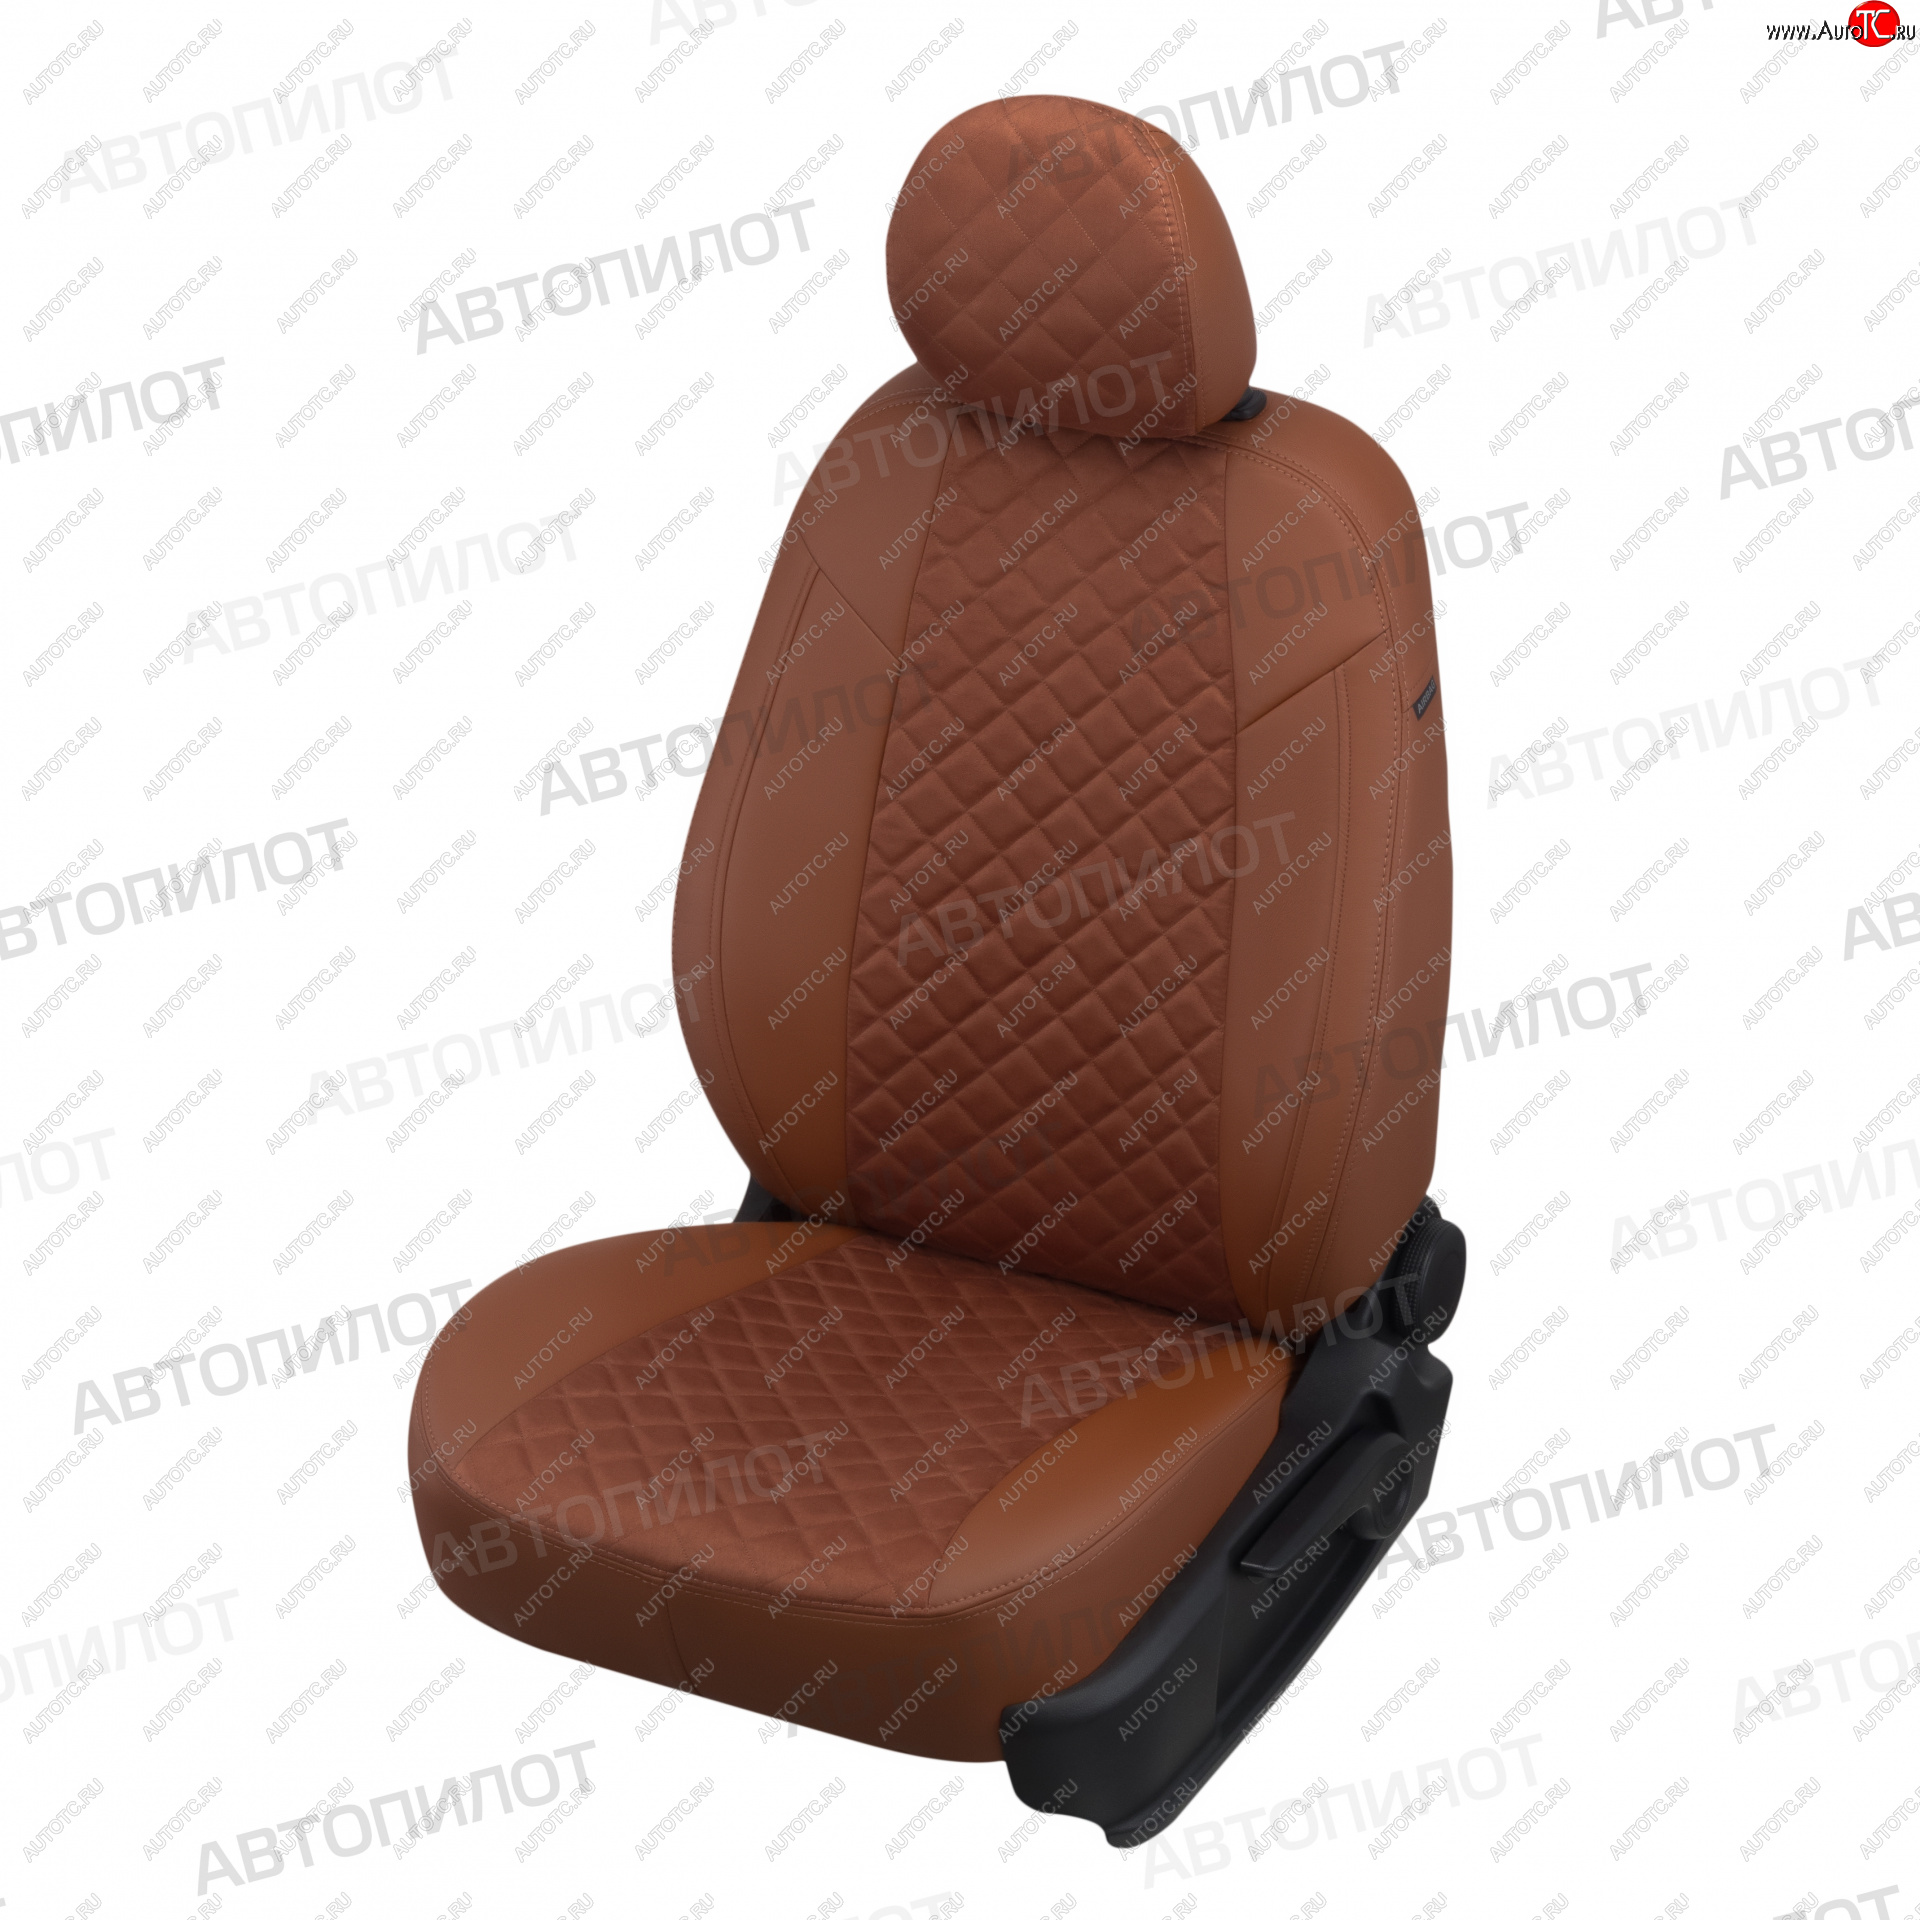 13 999 р. Чехлы сидений (экокожа/алькантара) Автопилот Ромб  Chery QQ6 (2006-2010) (коричневый)